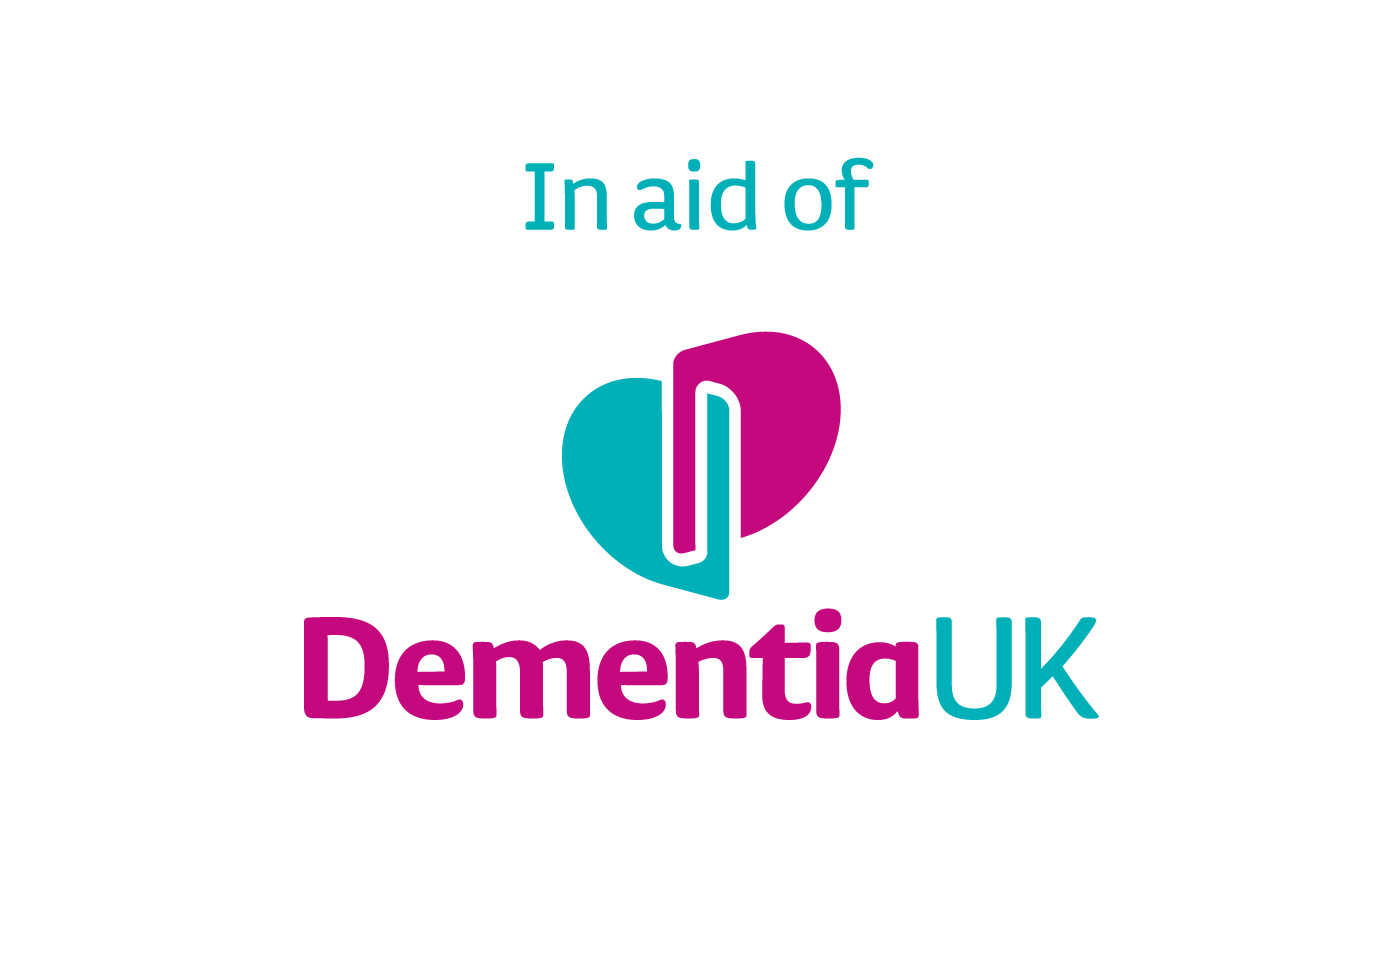 In aid of Dementia UK